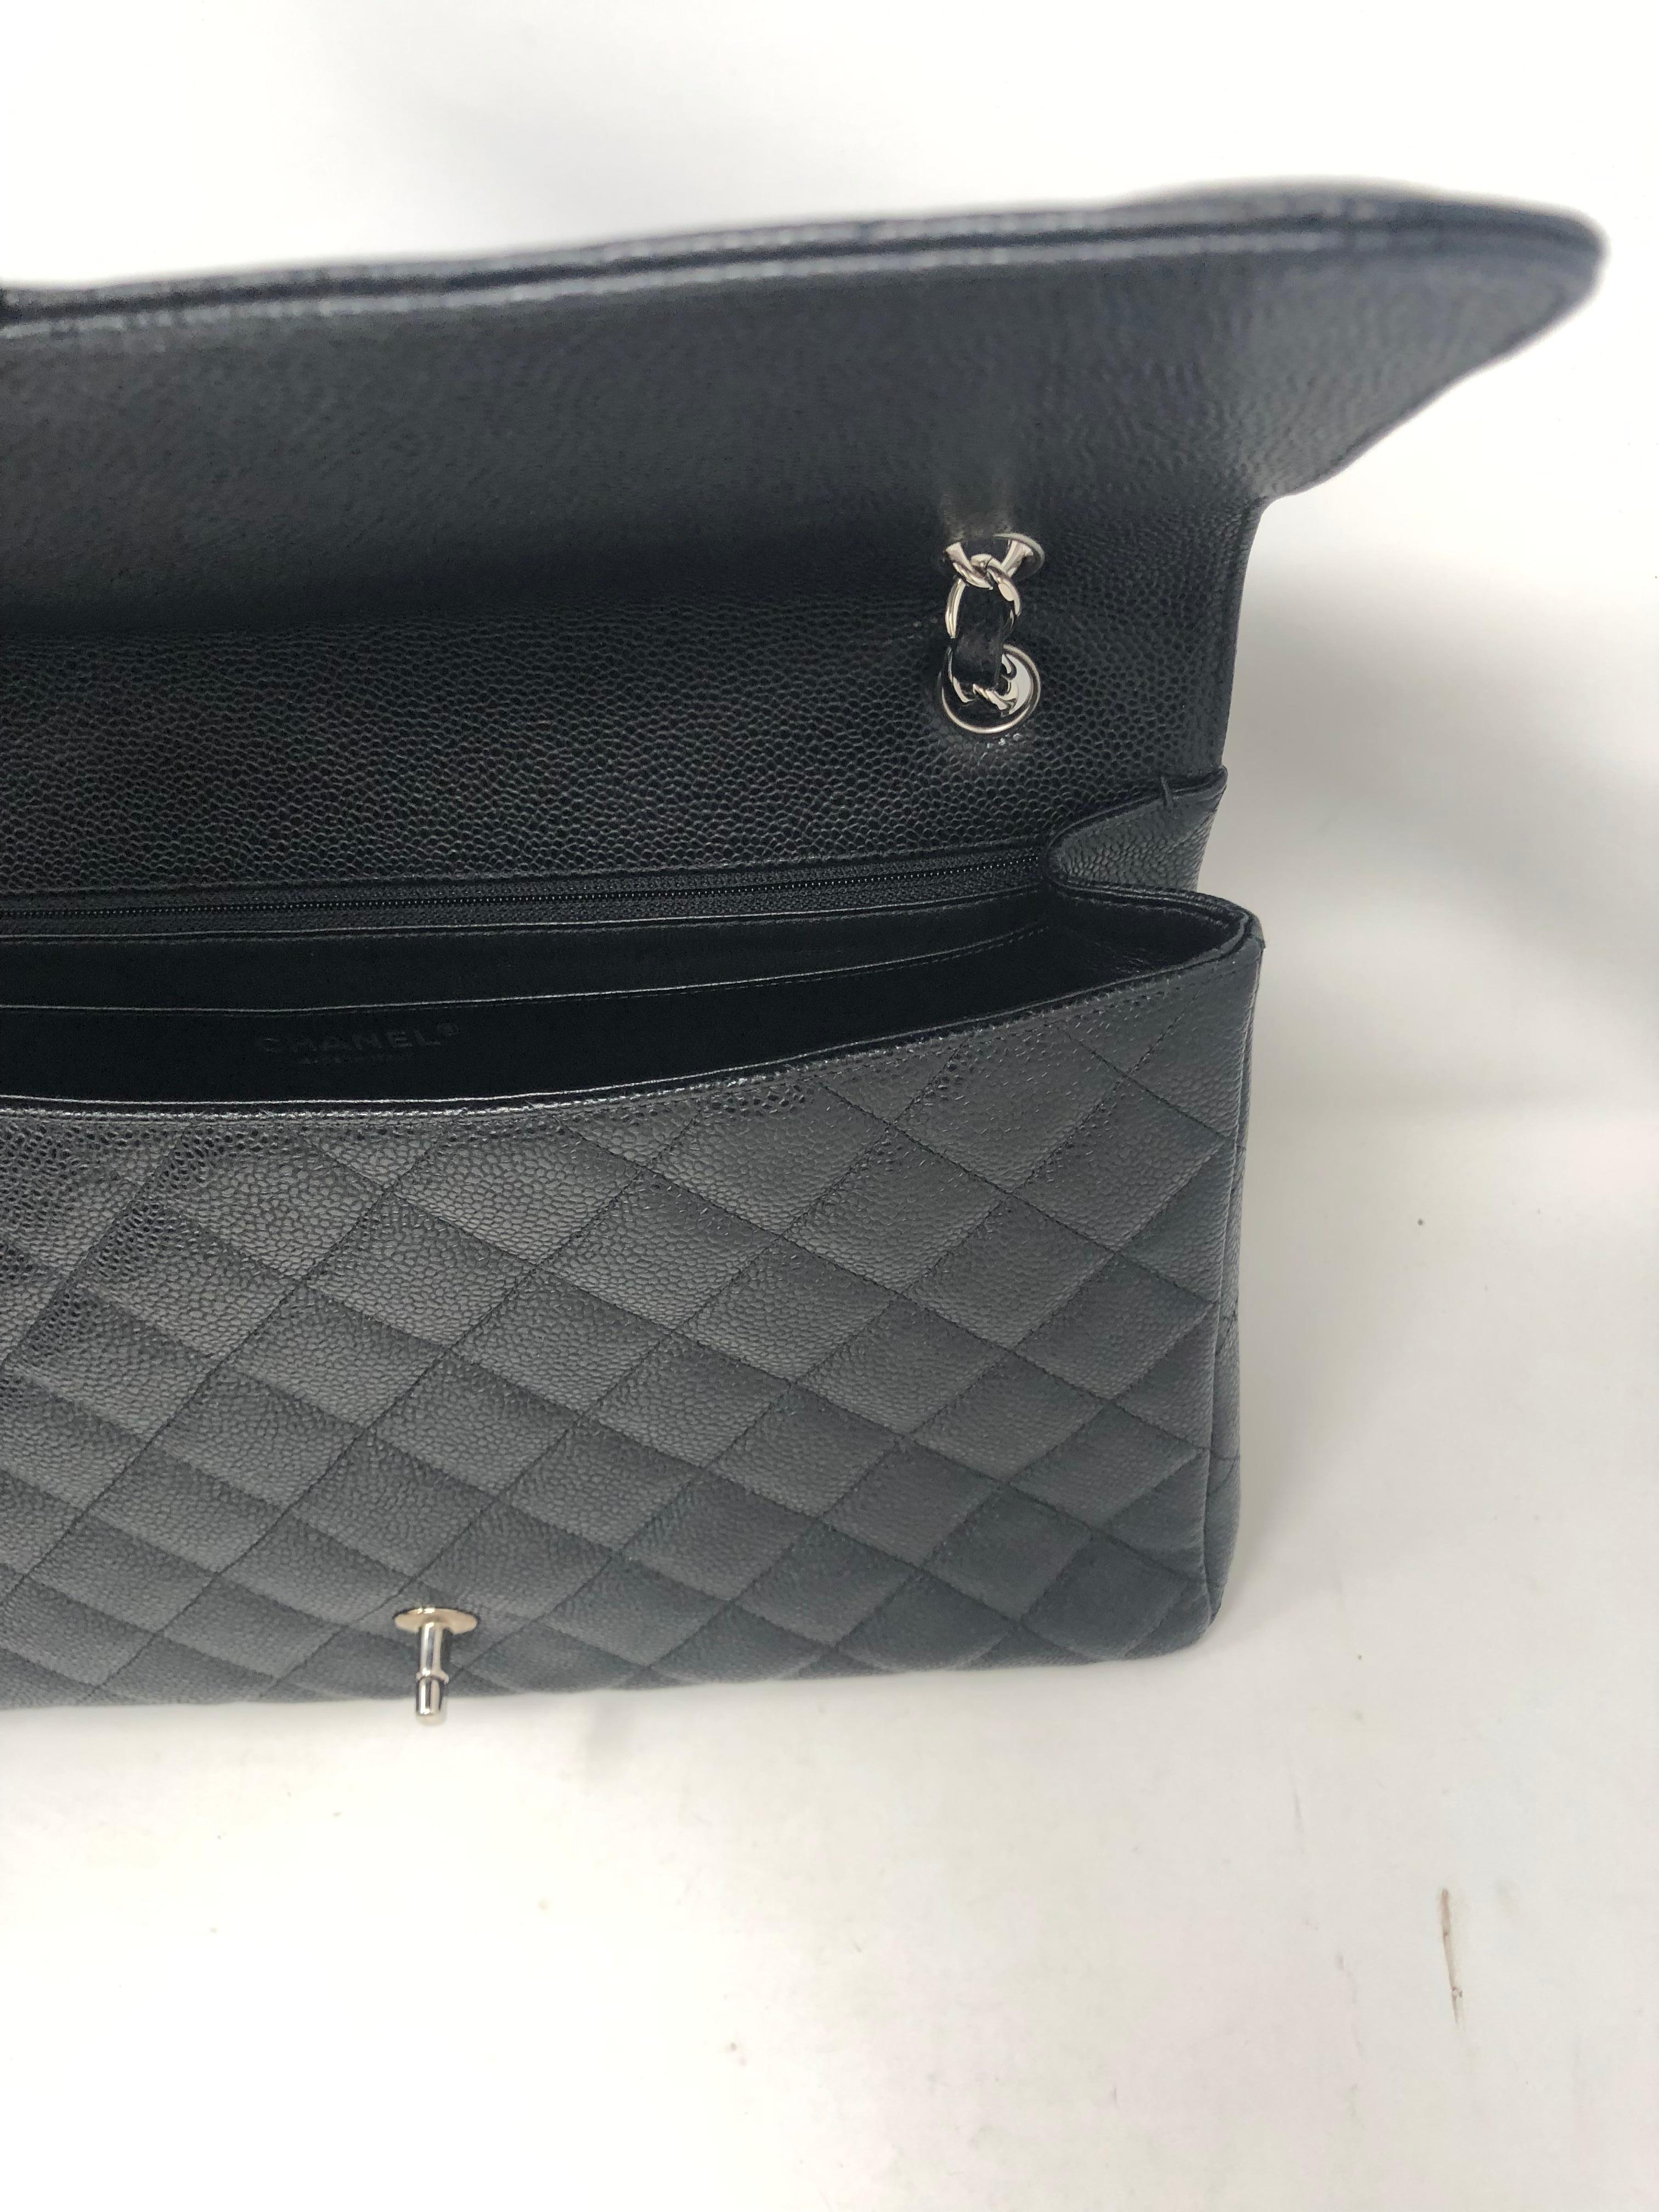 Chanel Black Caviar Leather Maxi Bag 5